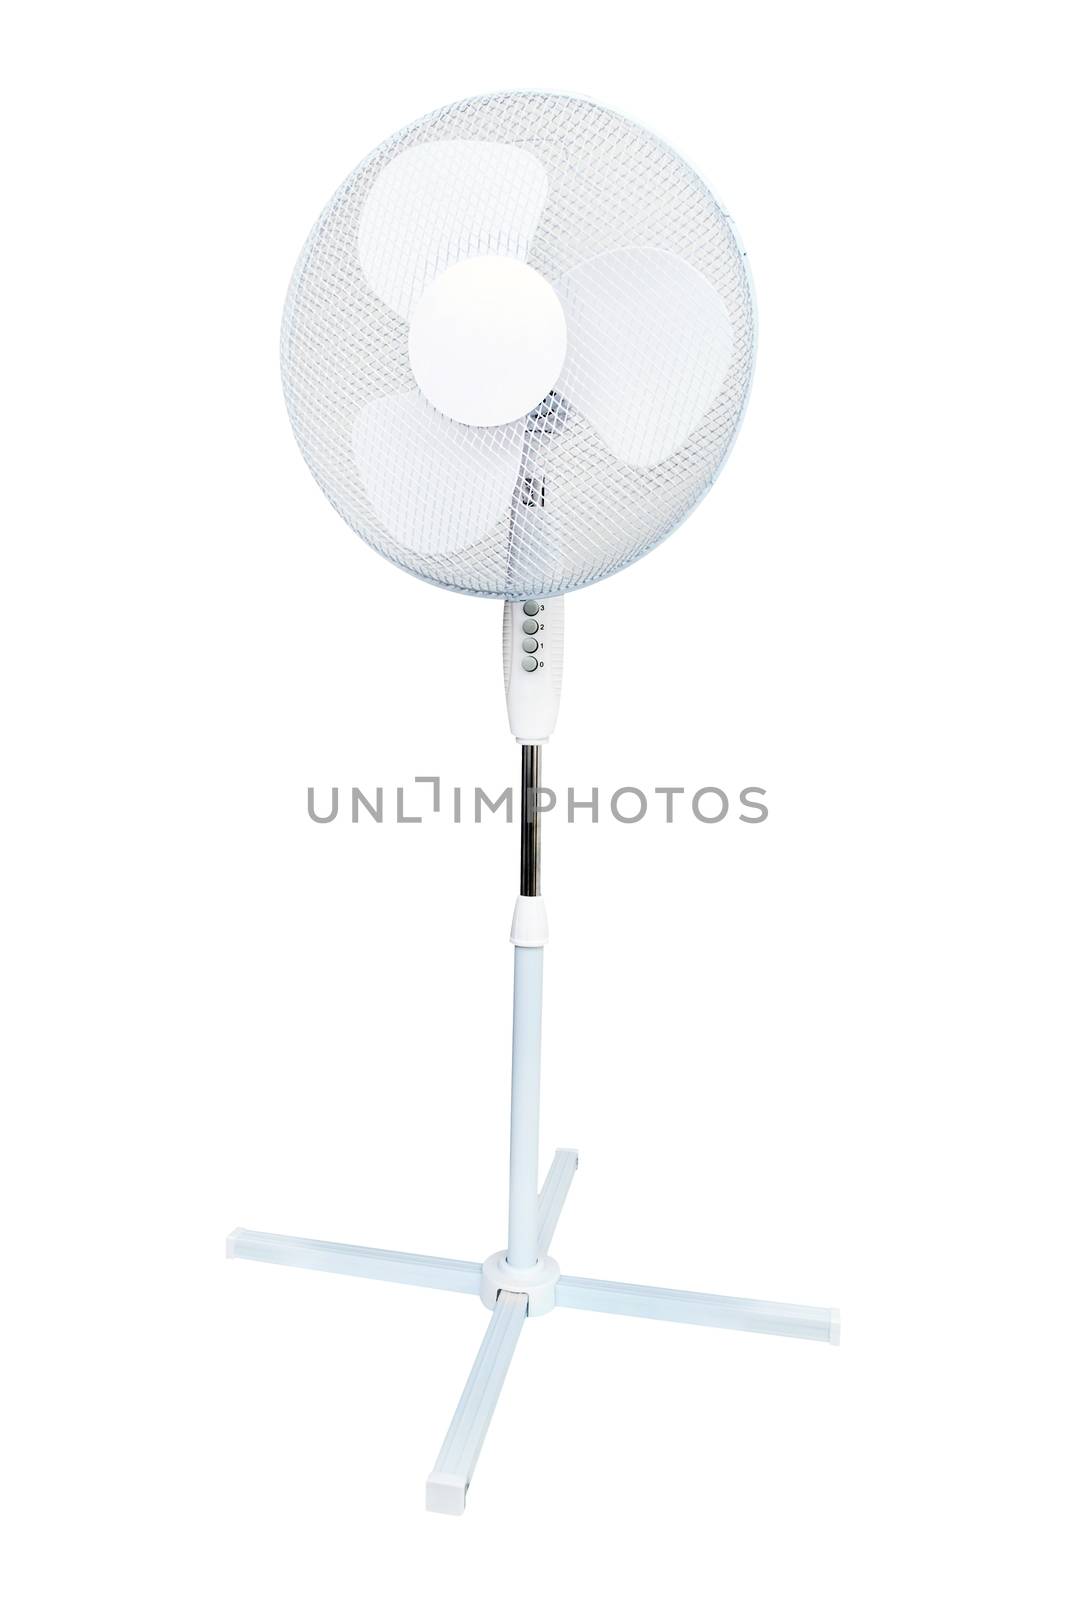 Pedestal floor fan isolated on white